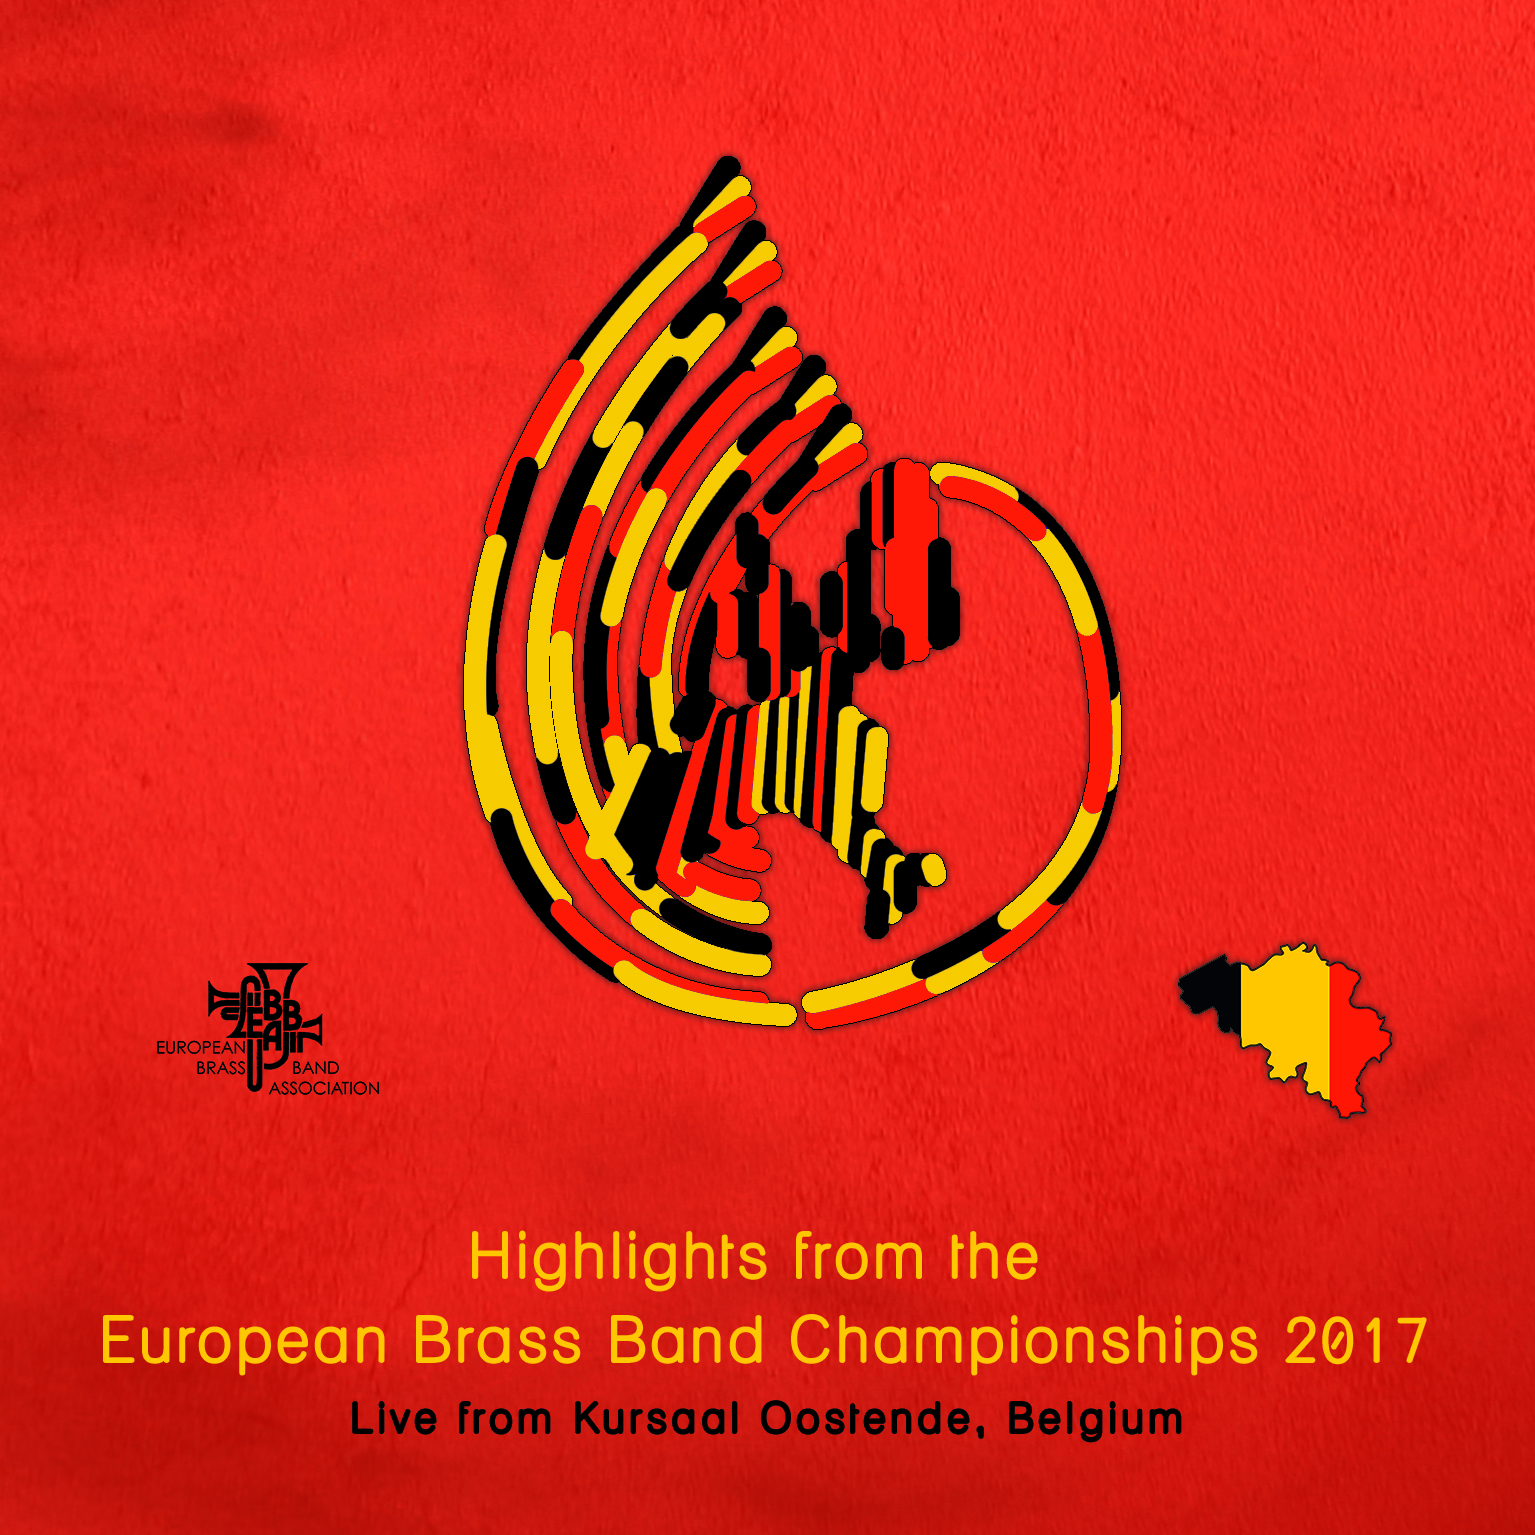 European Brass Band Championships 2017 - Download